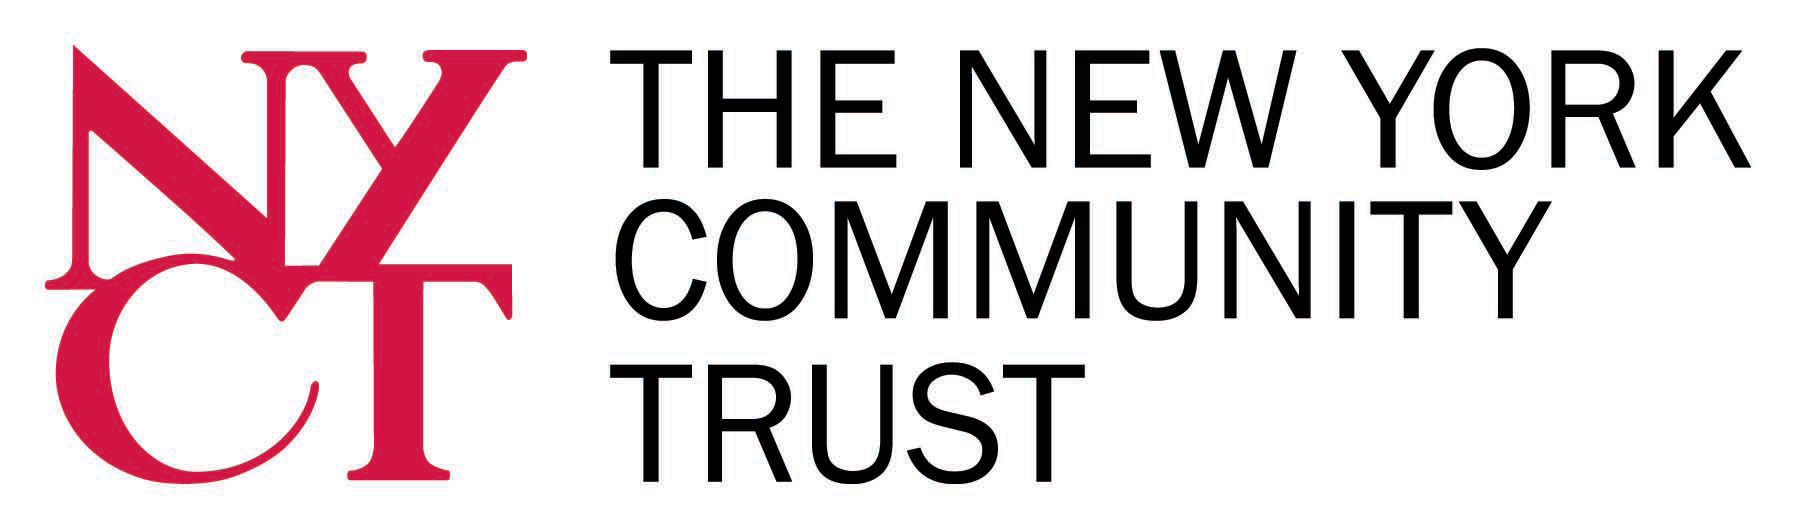 NY Community Trust Logo.png